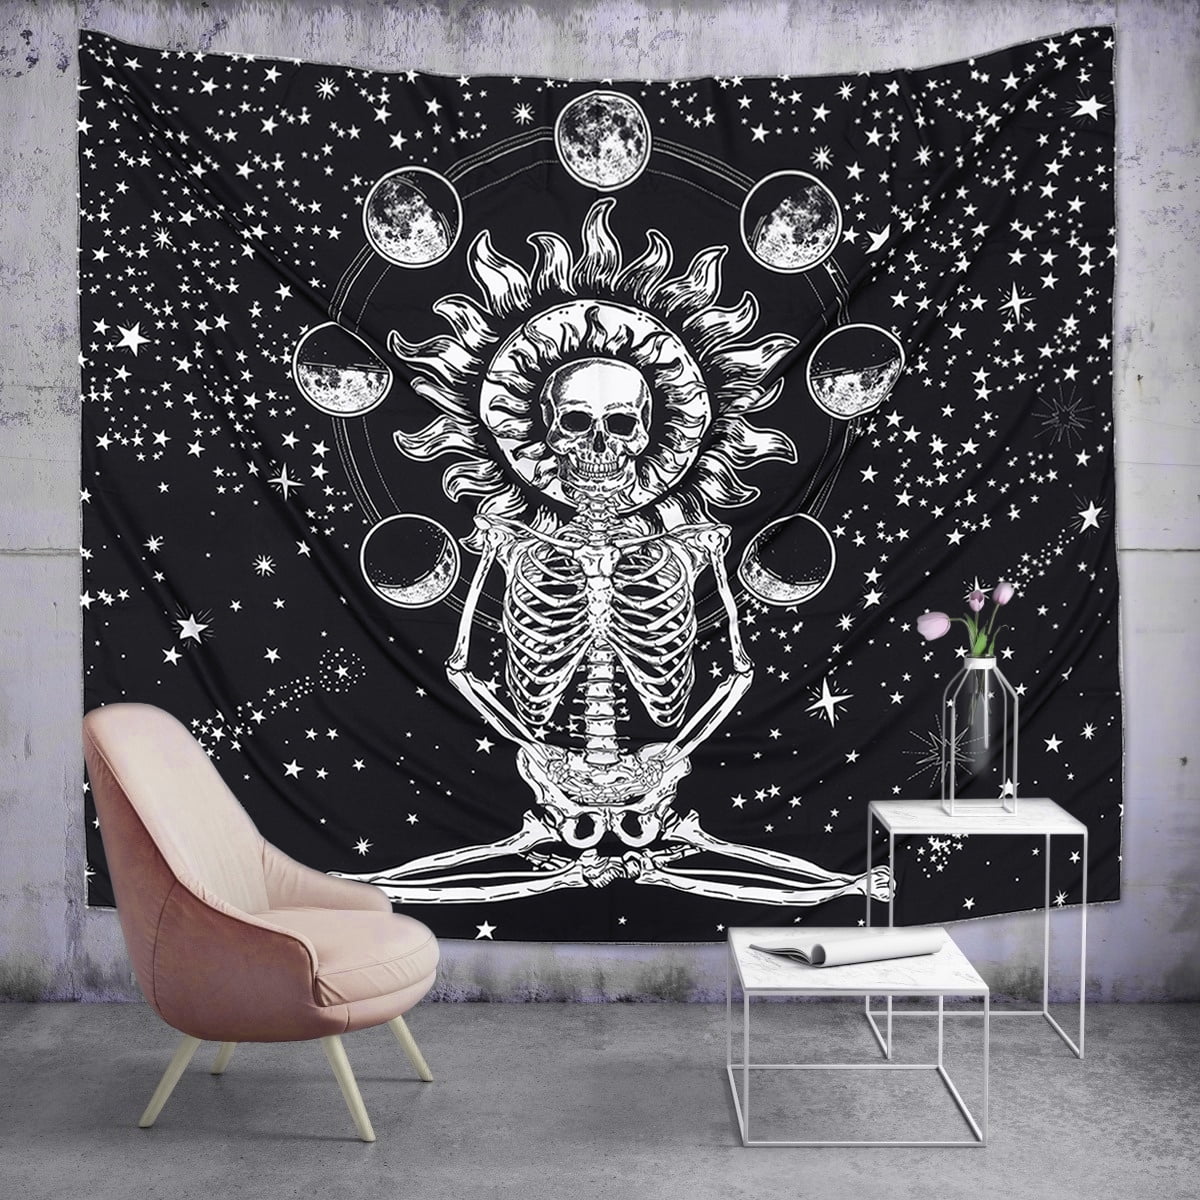 USA Mandala Skull Tapestry Wall Hanging Moon Phase Change Tapestries Home Decor 